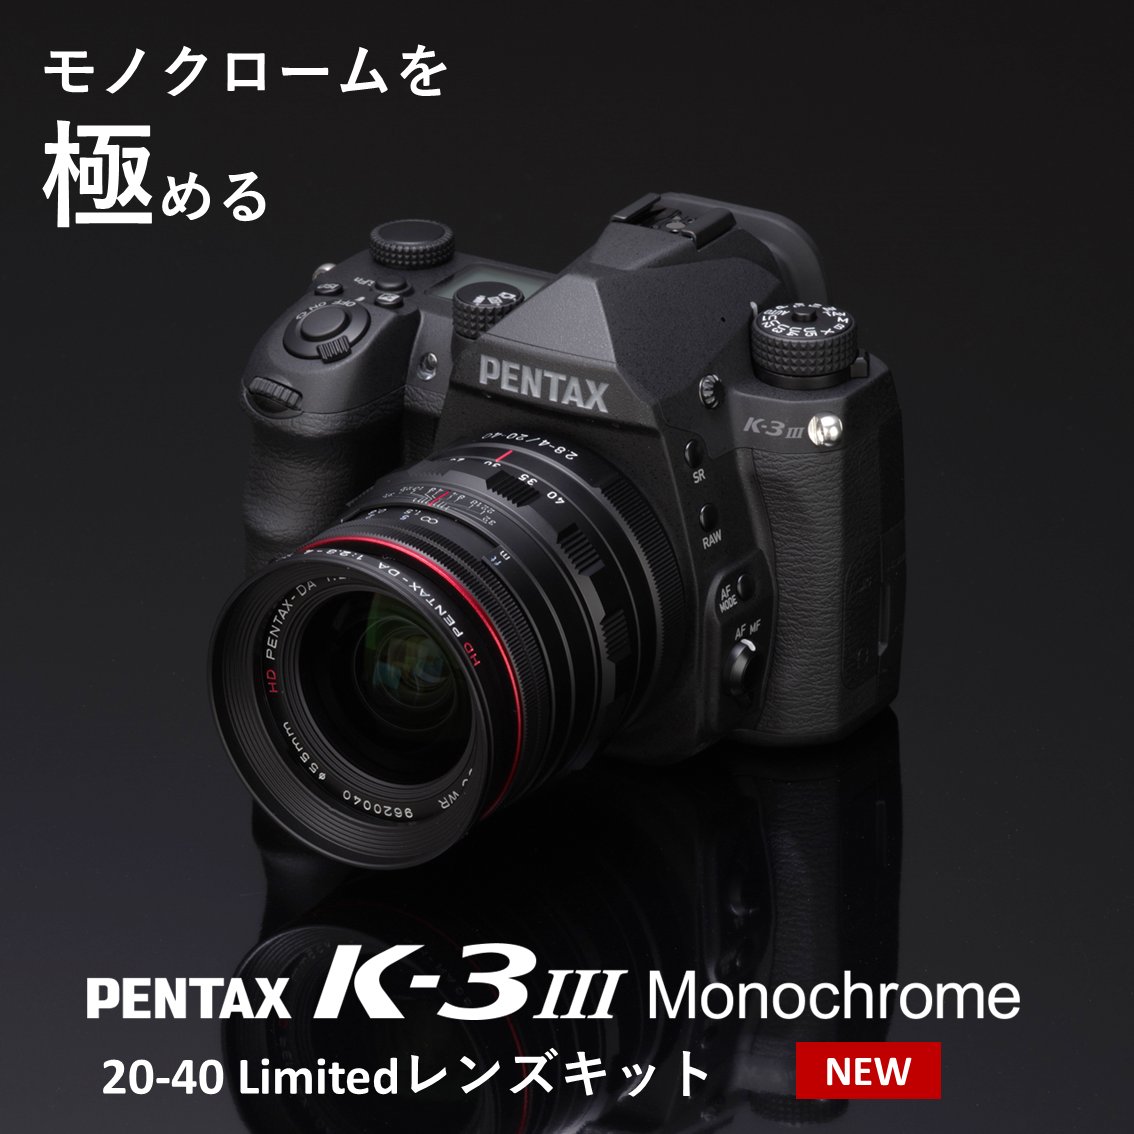 ［PENTAX K-3 Mark III Monochrome 20-40 Limitedレンズキット］
モノクローム専用デジタル一眼レフカメラ「K-3 Mark III Monochrome」と「HD PENTAX-DA 20-40mmF2.8-4ED Limited DC WR」を同梱したレンズキットを新発売いたしました。

製品情報：ricoh-imaging.co.jp/japan/products…

#pentaxk3mkiiimono